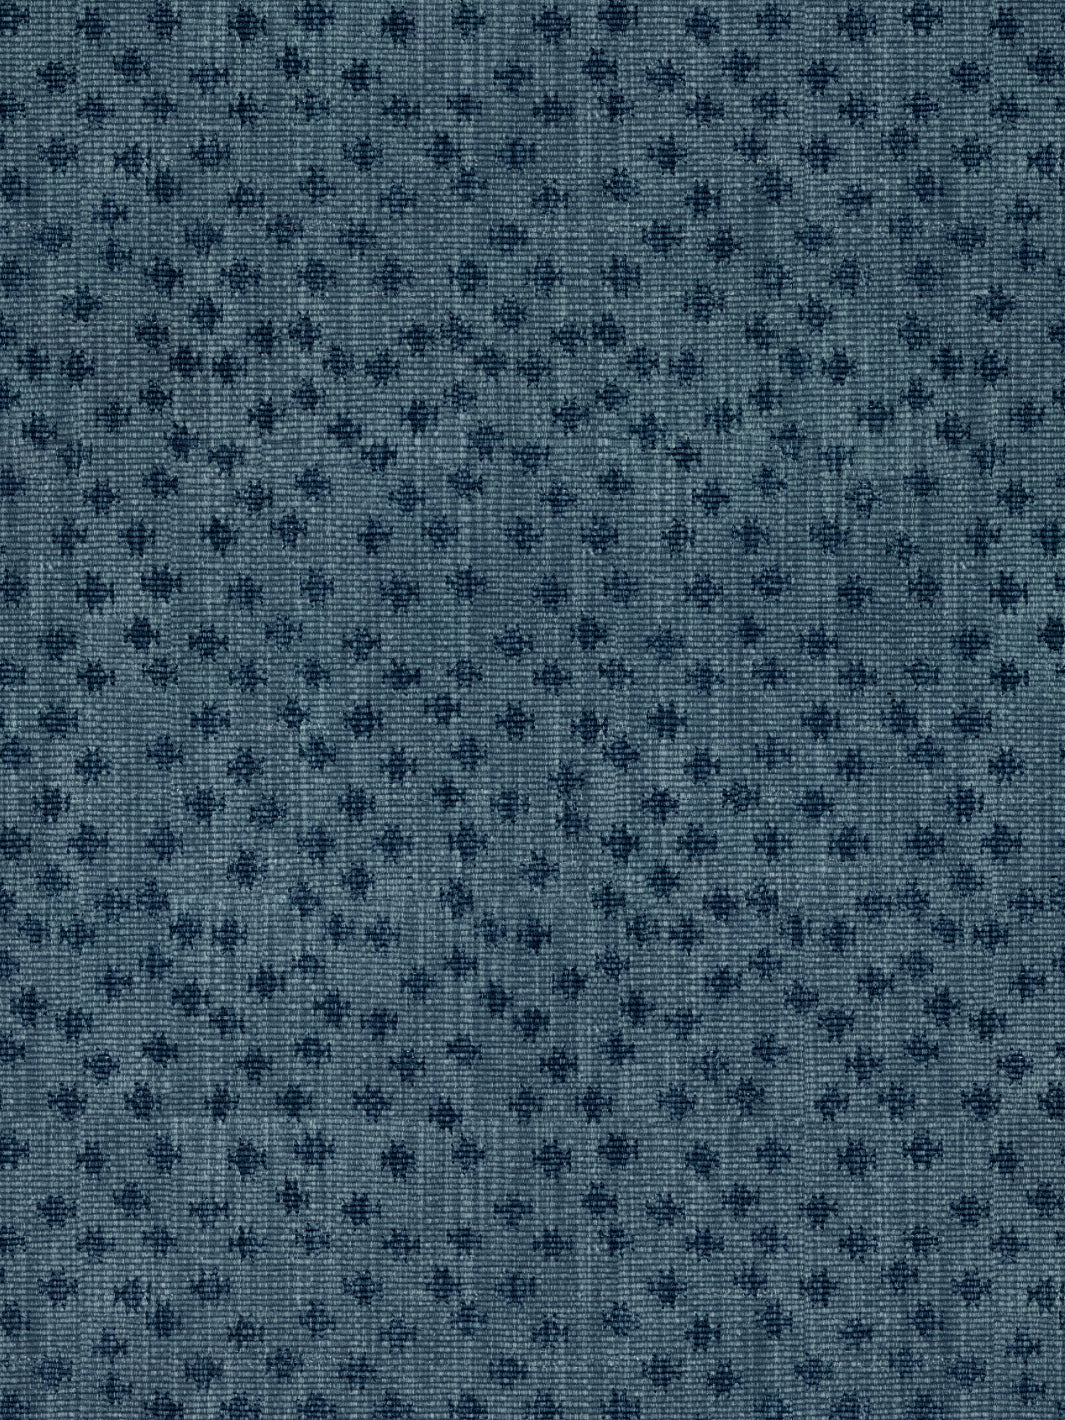 'Northstar Star' Linen Fabric by Nathan Turner - Dark Blue